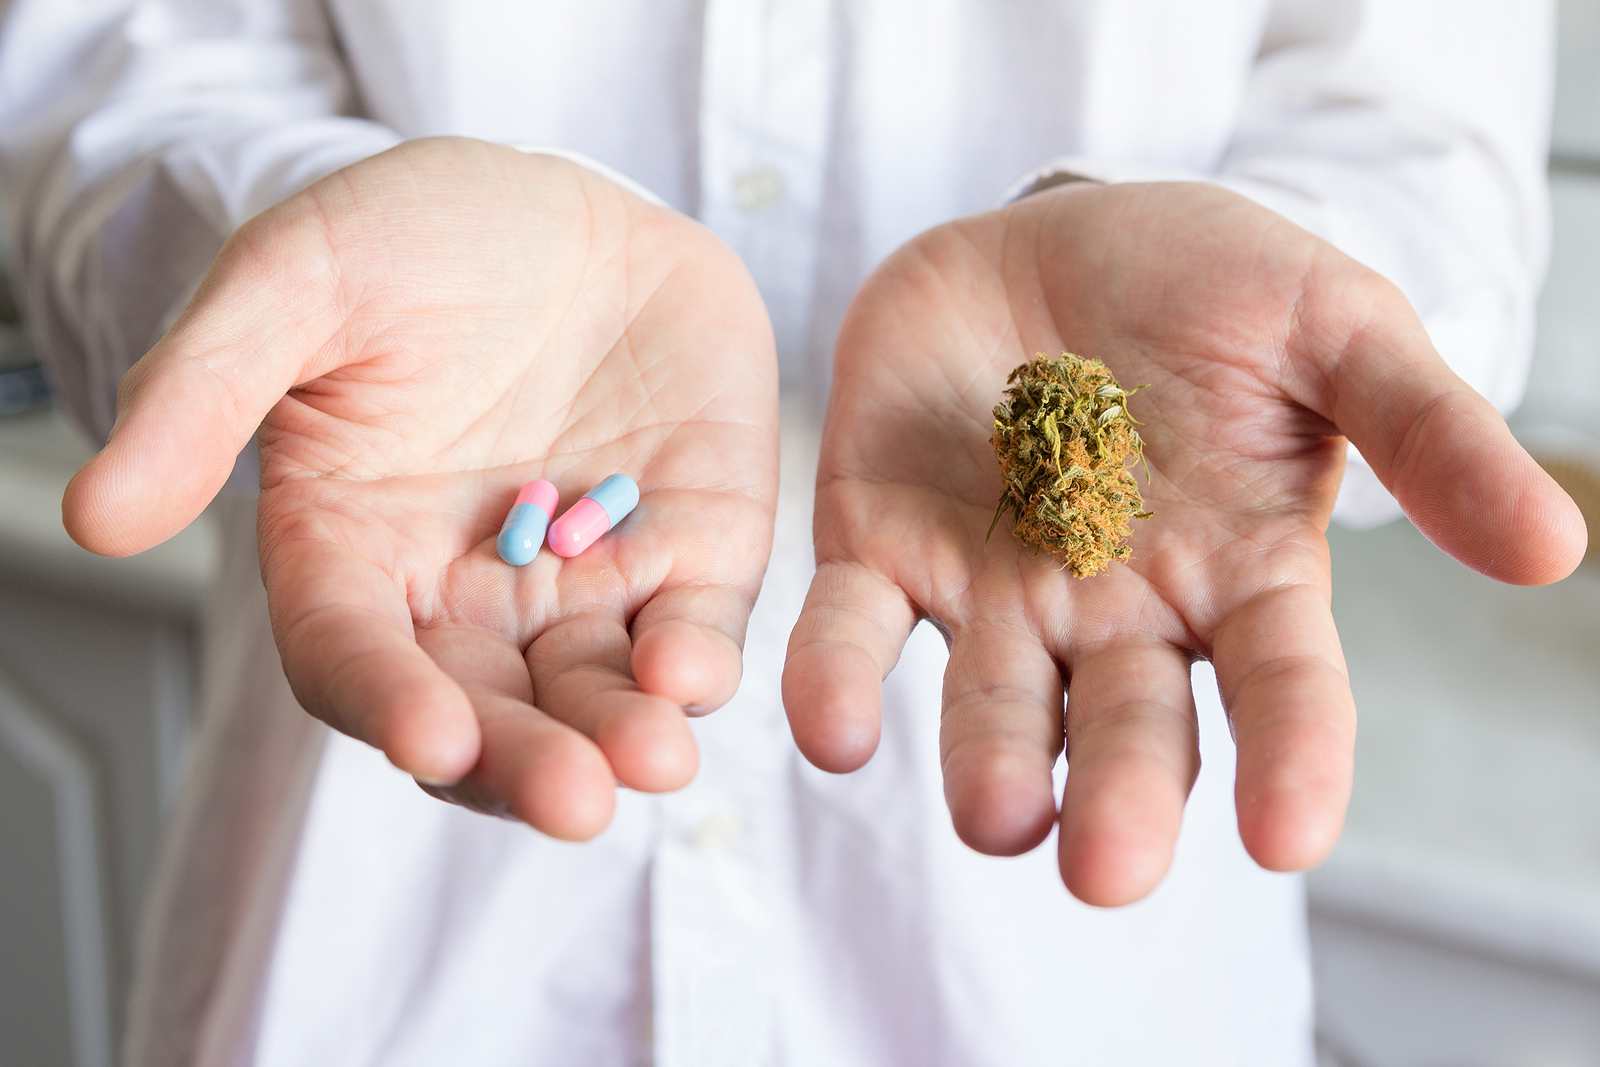 Is Medical Cannabis a Potential Alternative to Prescription Opioids?